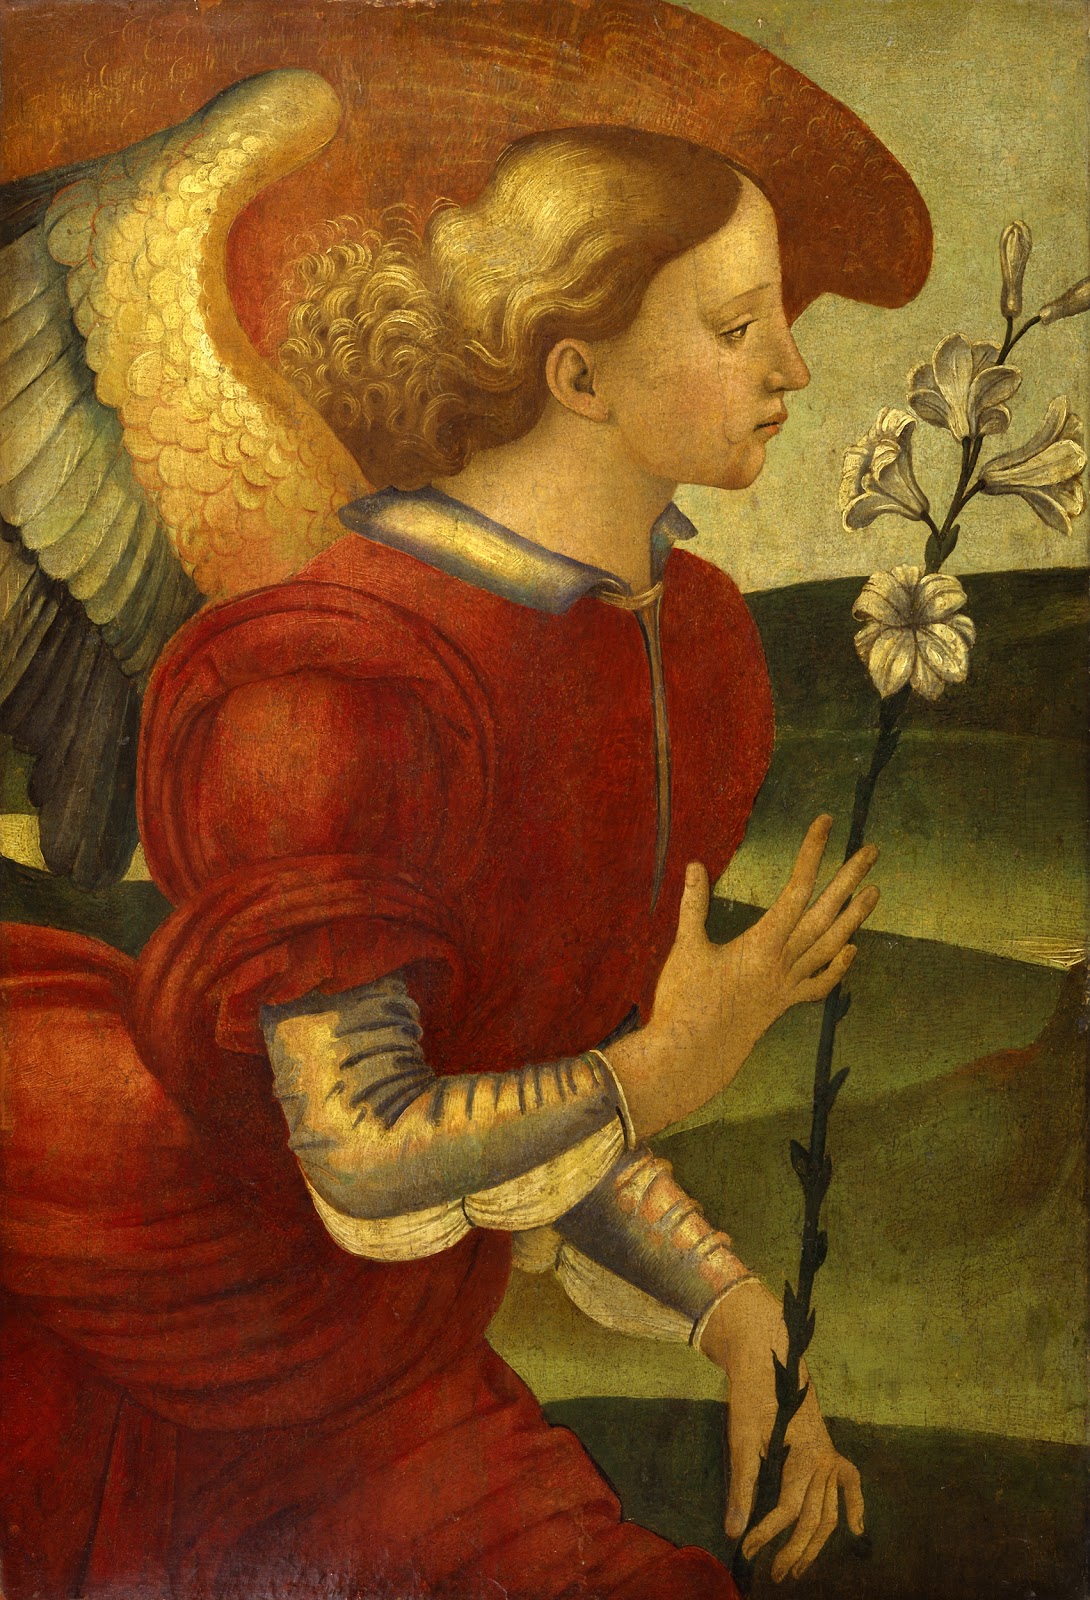 Luca+Signorelli-1445-1523 (32).jpg